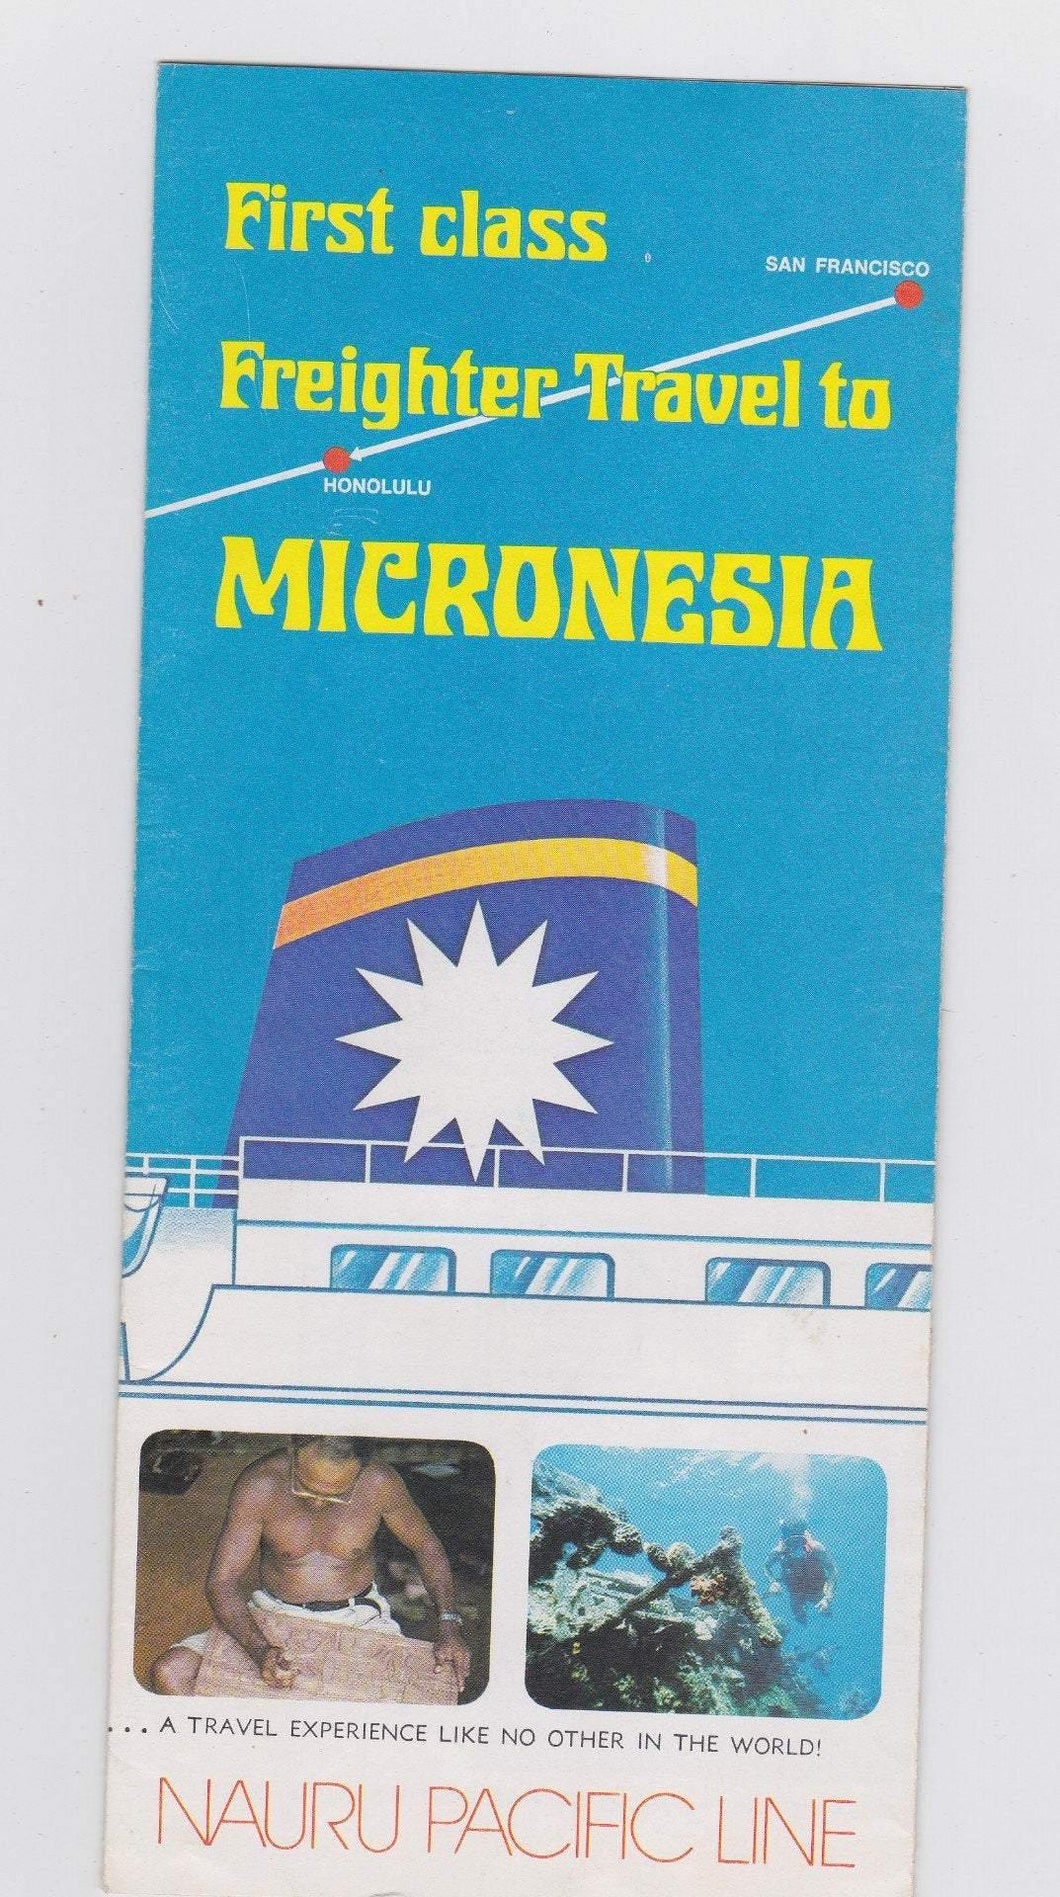 Nauru Pacific Line M.V. Enna G 1977-78 Micronesia Freighter Cruises Brochure - TulipStuff